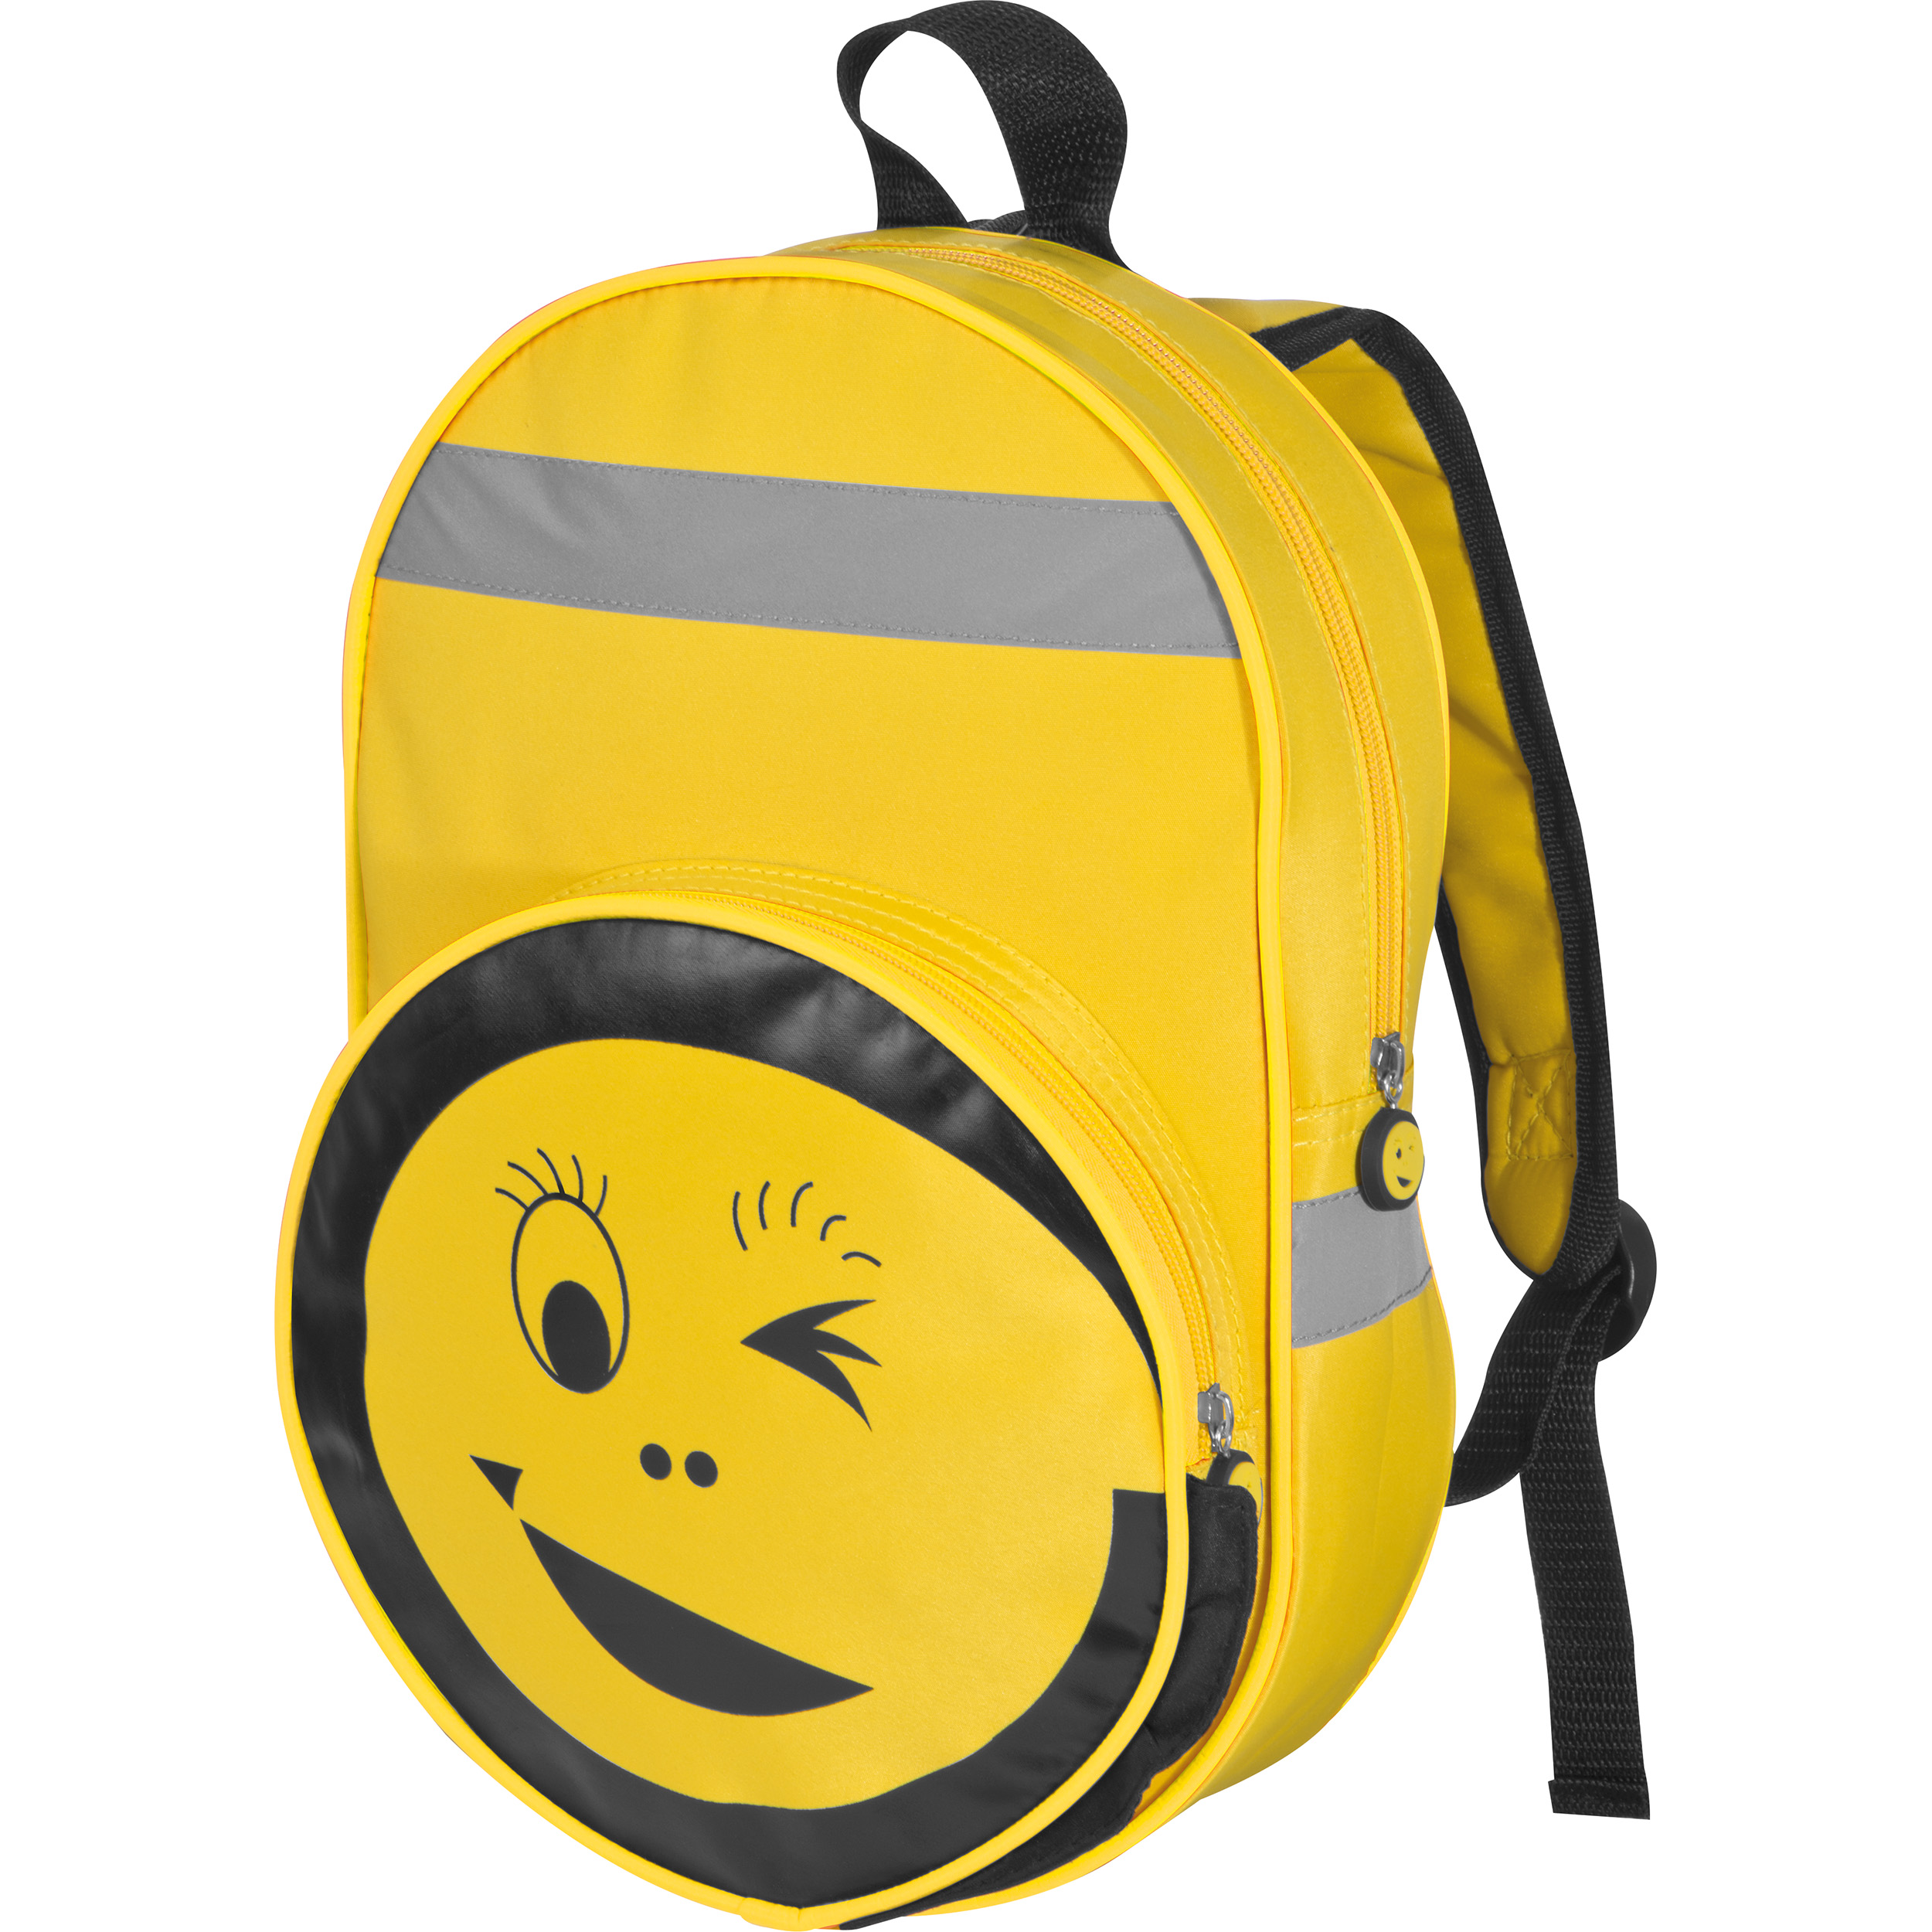 Smiley backpack